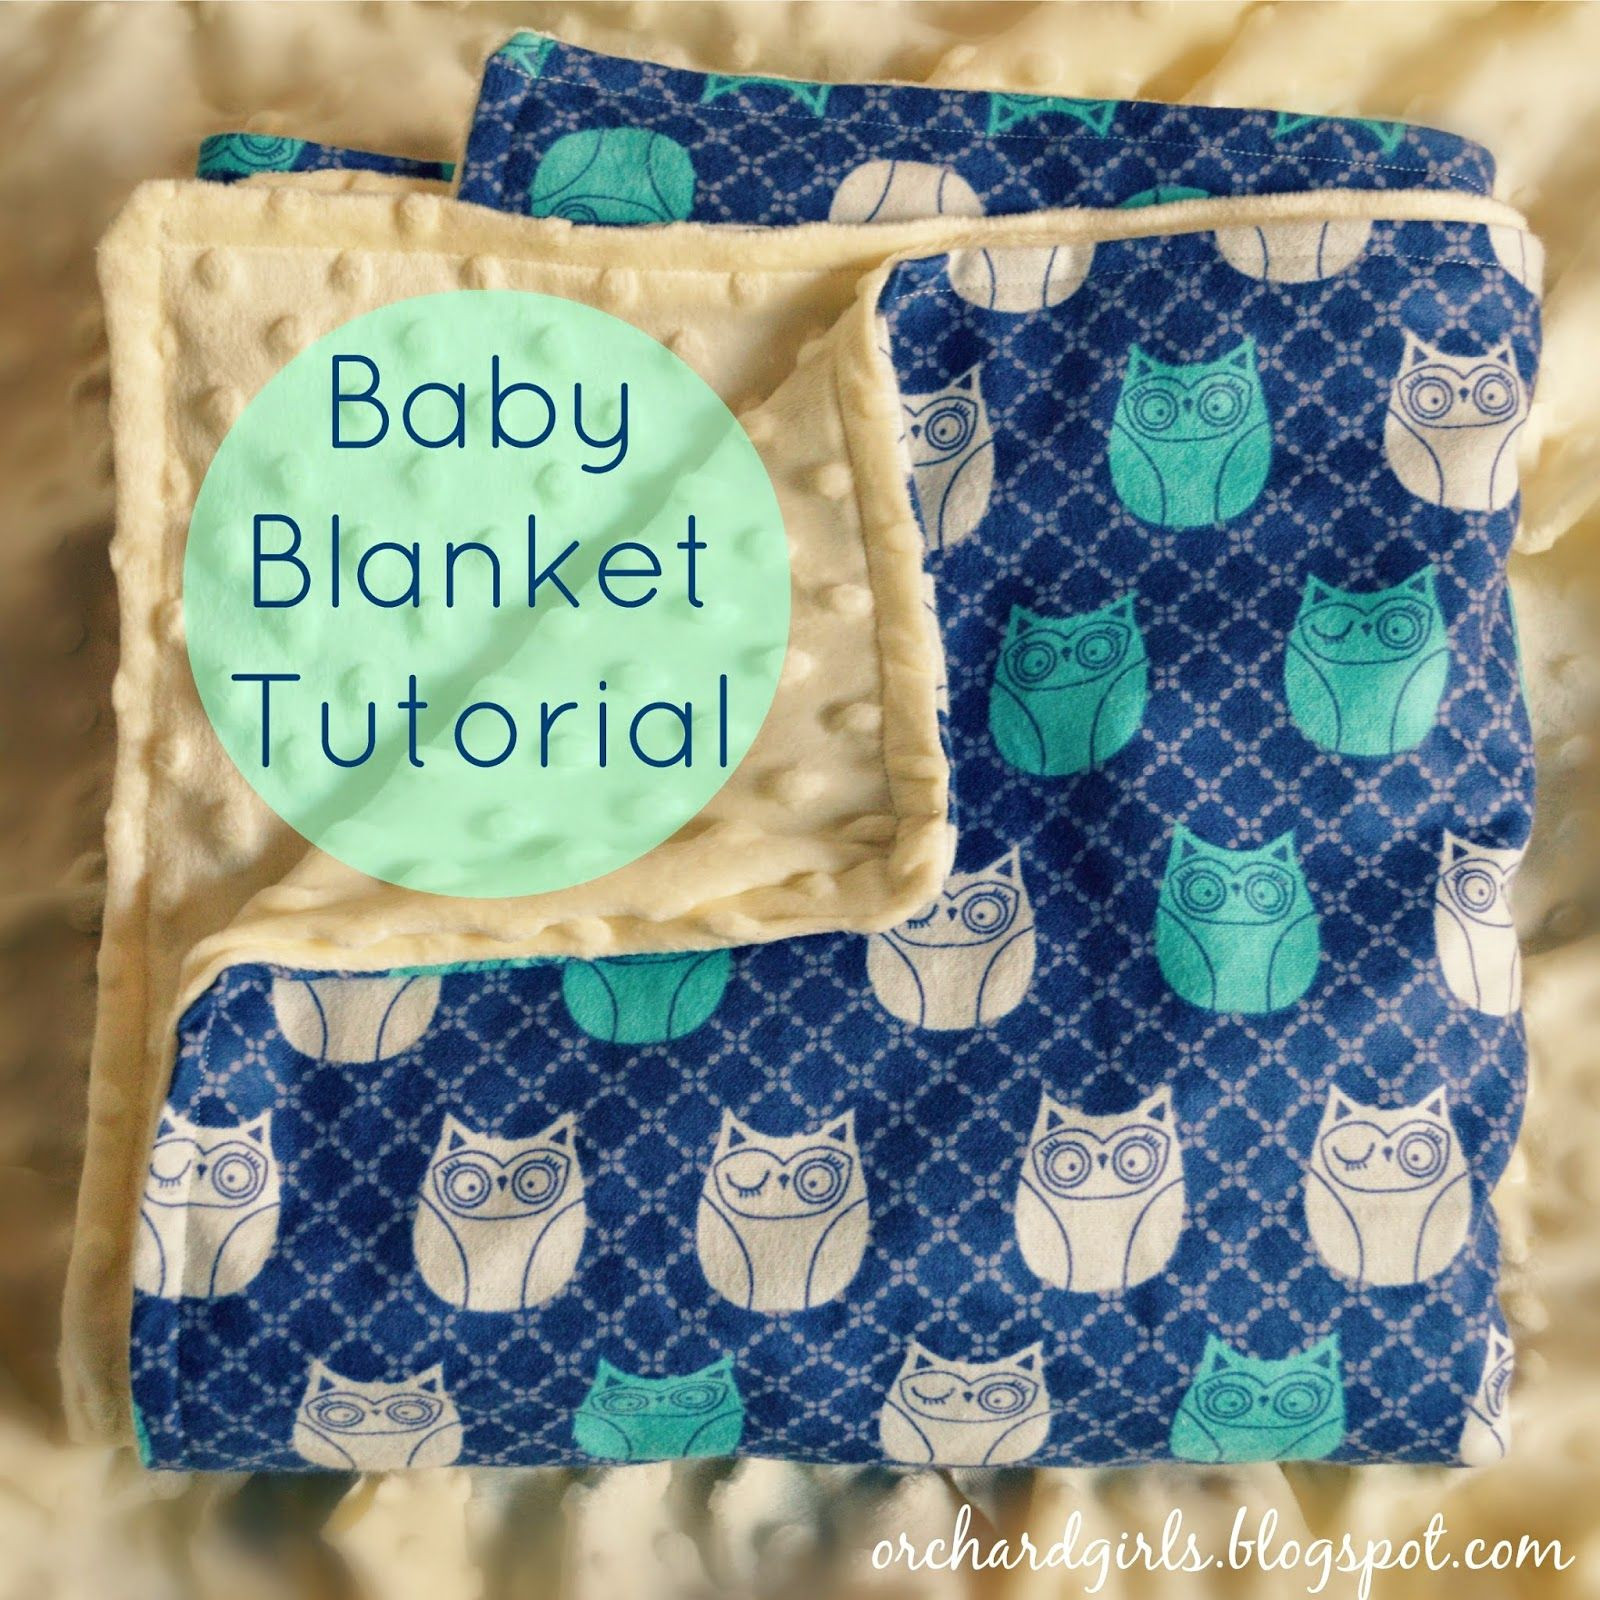 DIY Baby Blanket Ideas
 Orchard Girls Super easy DIY Baby Blanket Tutorial with